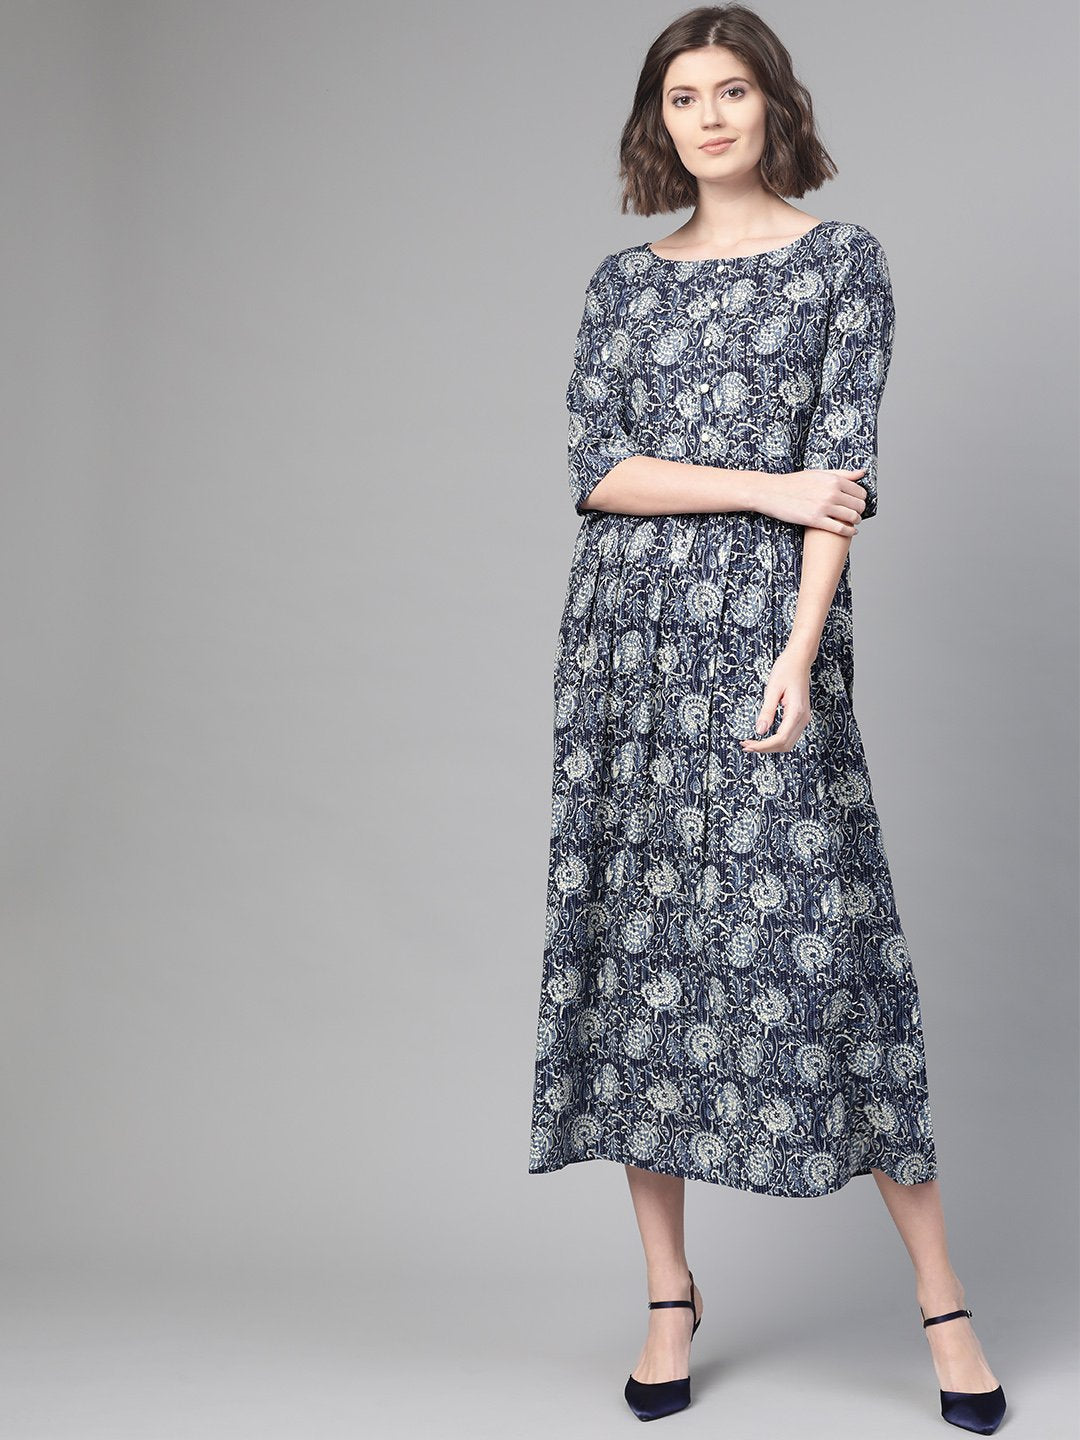 Women's Nayo Navy Blue & Cream Floral Printed Maxi Dress - Nayo Clothing